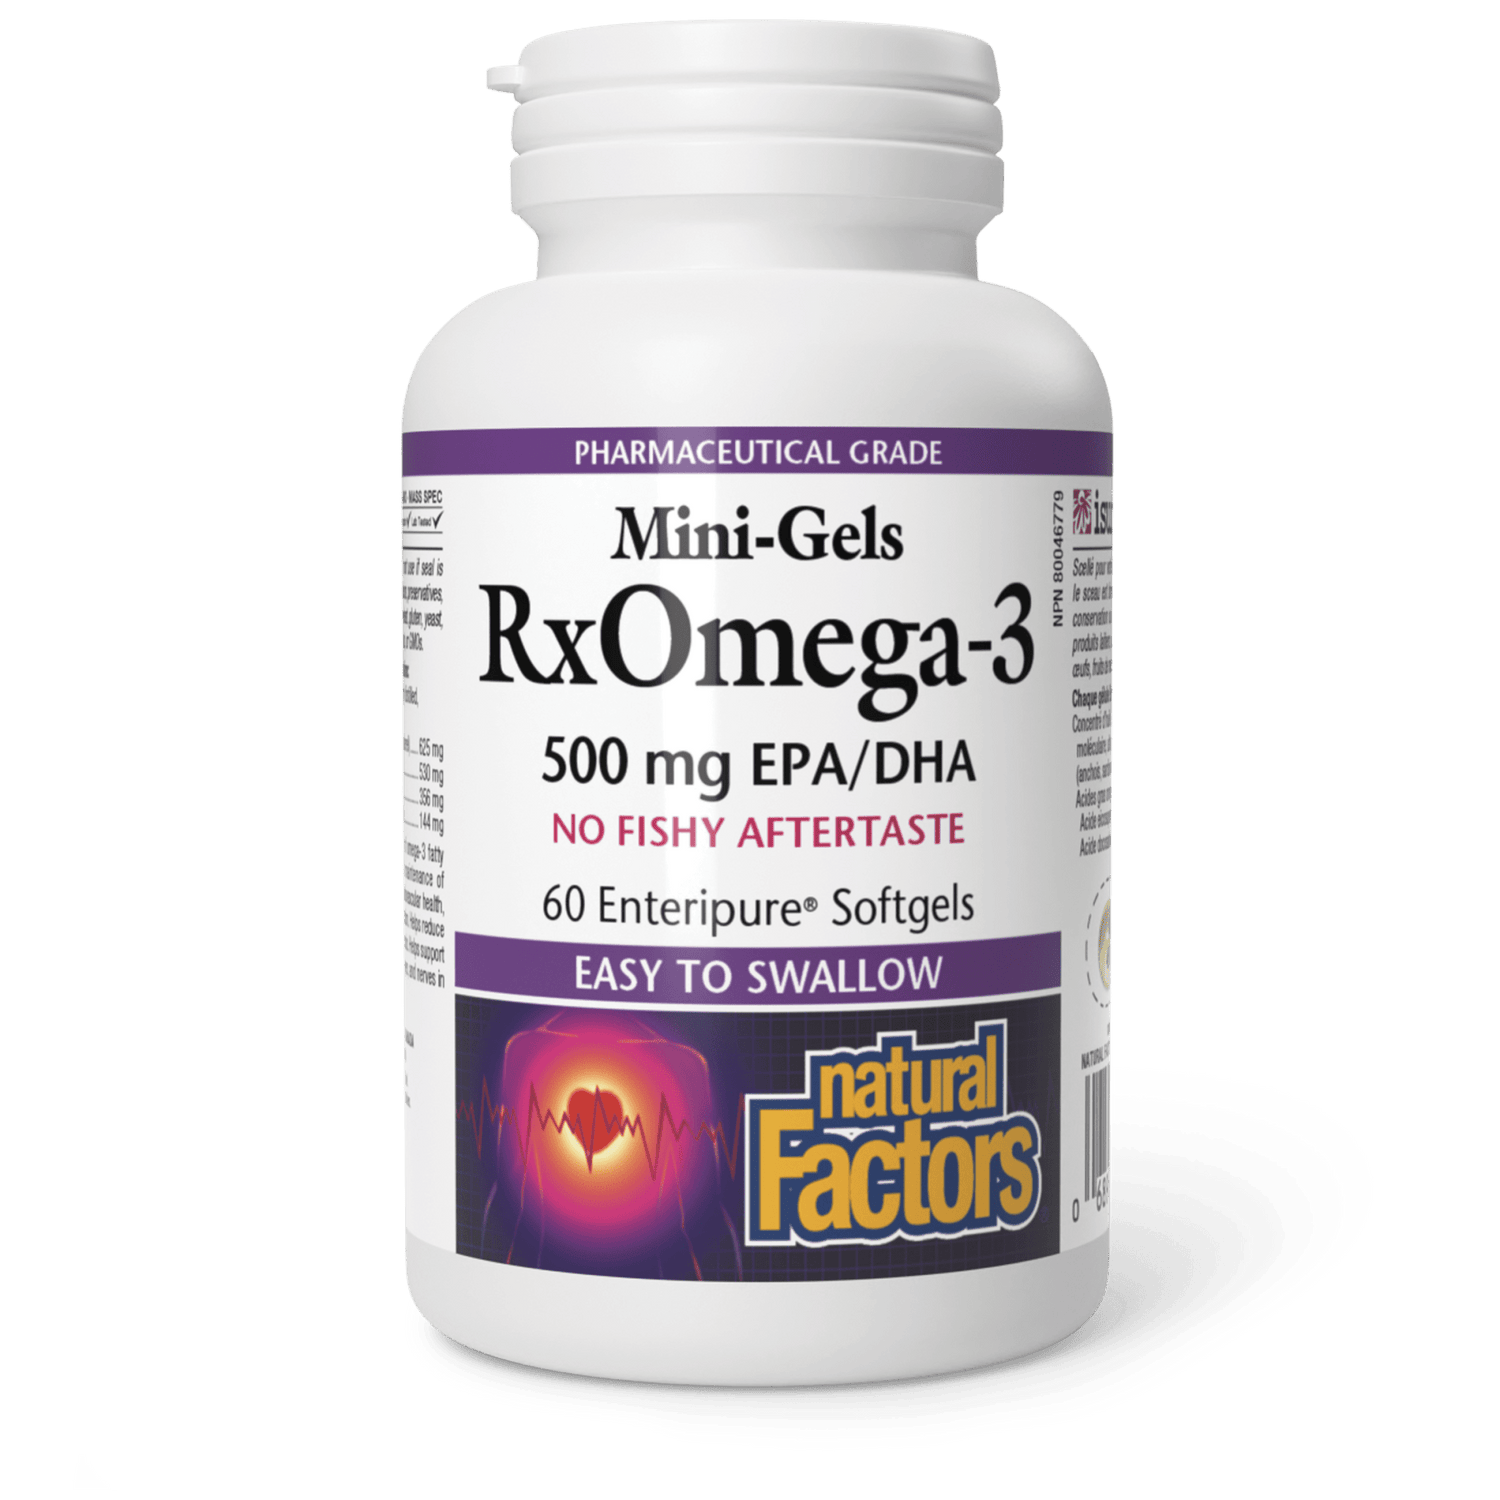 RxOmega-3 Mini-Gels 500 mg, Natural Factors|v|image|35494